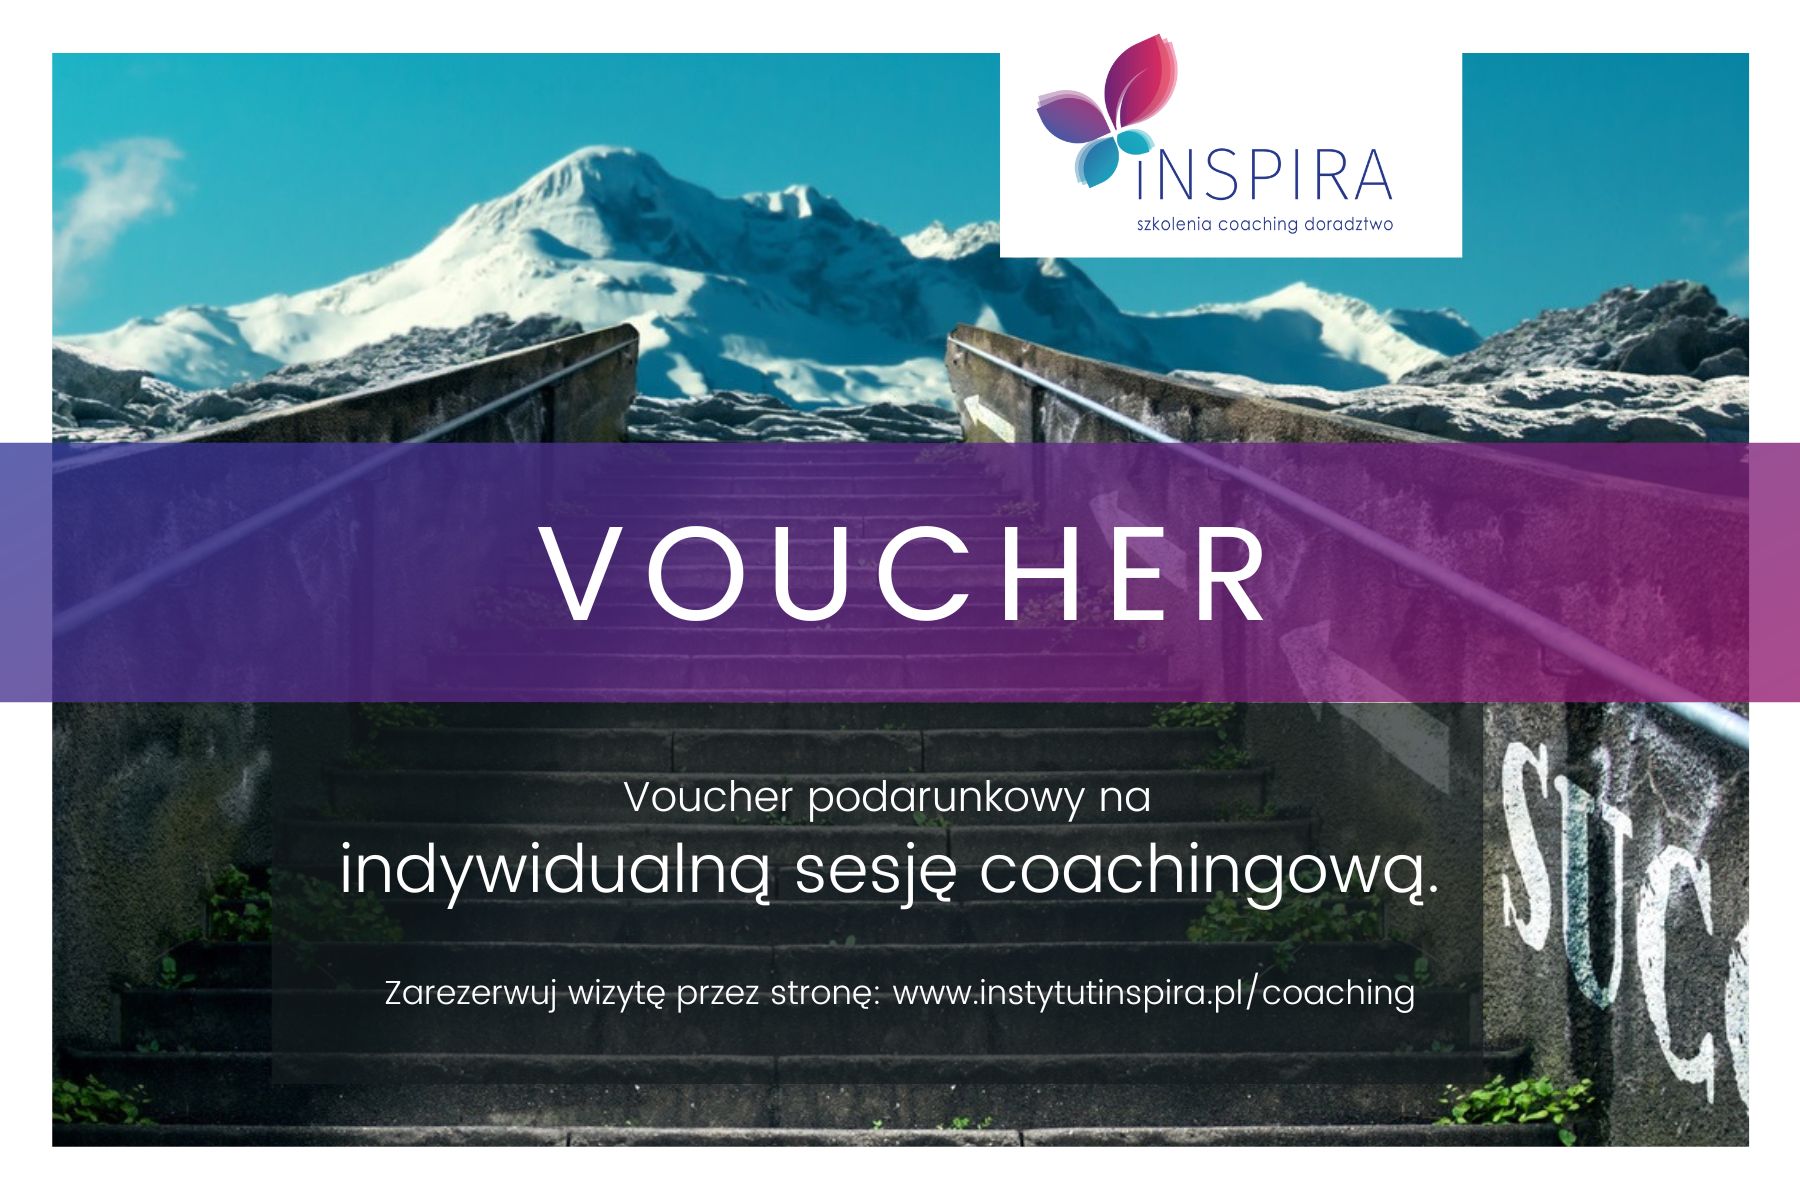 Voucher - indywidualna sesja coachingowa